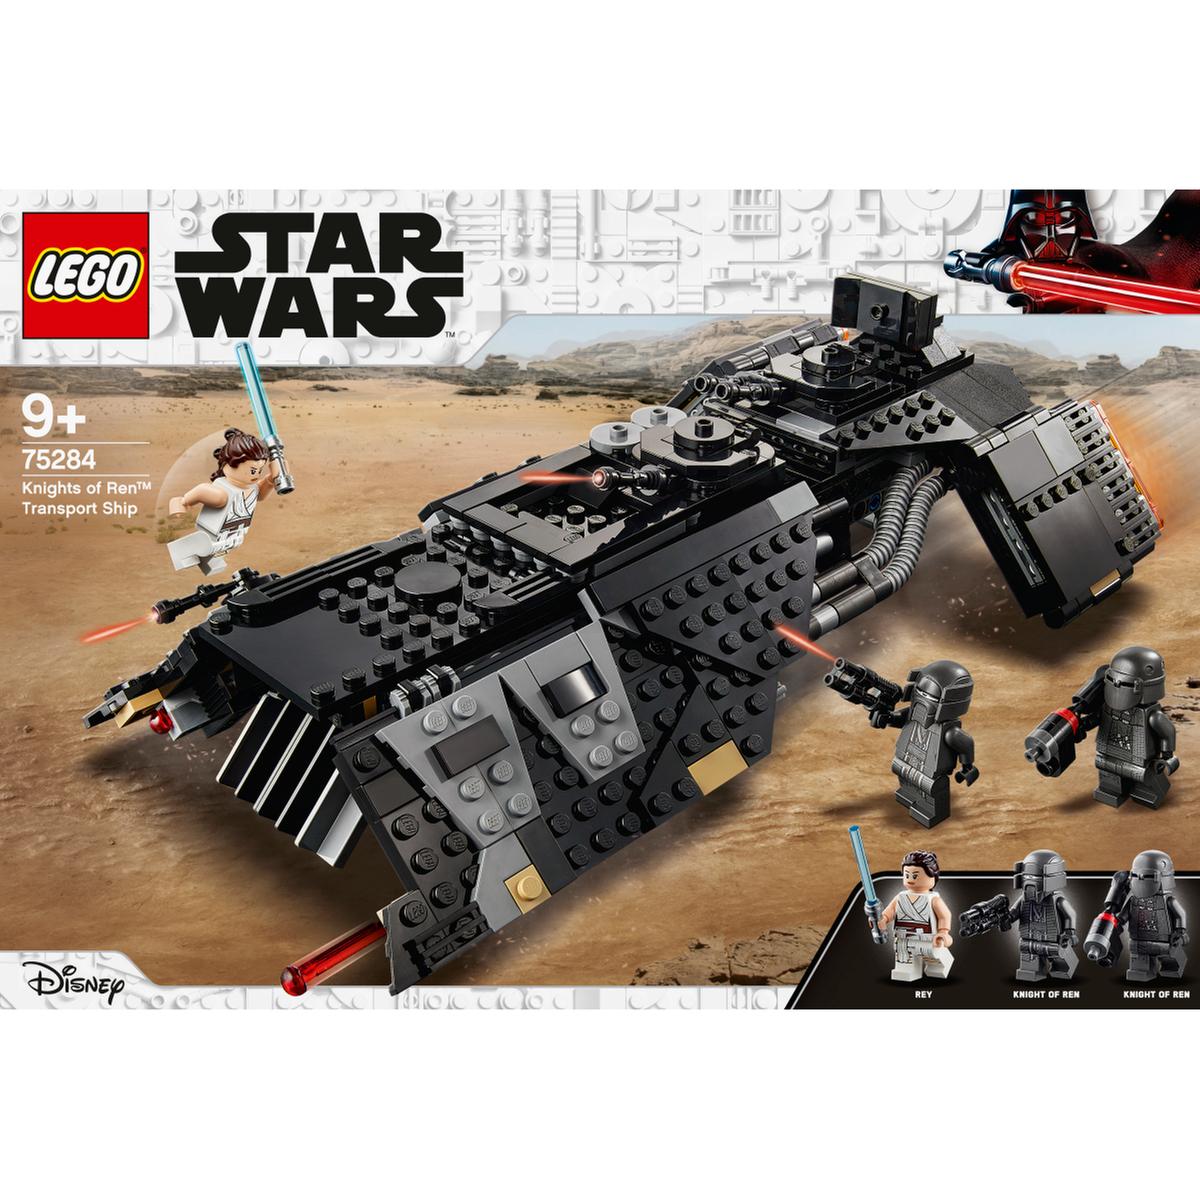 LEGO Star Wars - Nave de Transporte dos Cavaleiros de Ren – 75284 | LEGO  STAR WARS | Loja de brinquedos e videojogos Online Toysrus